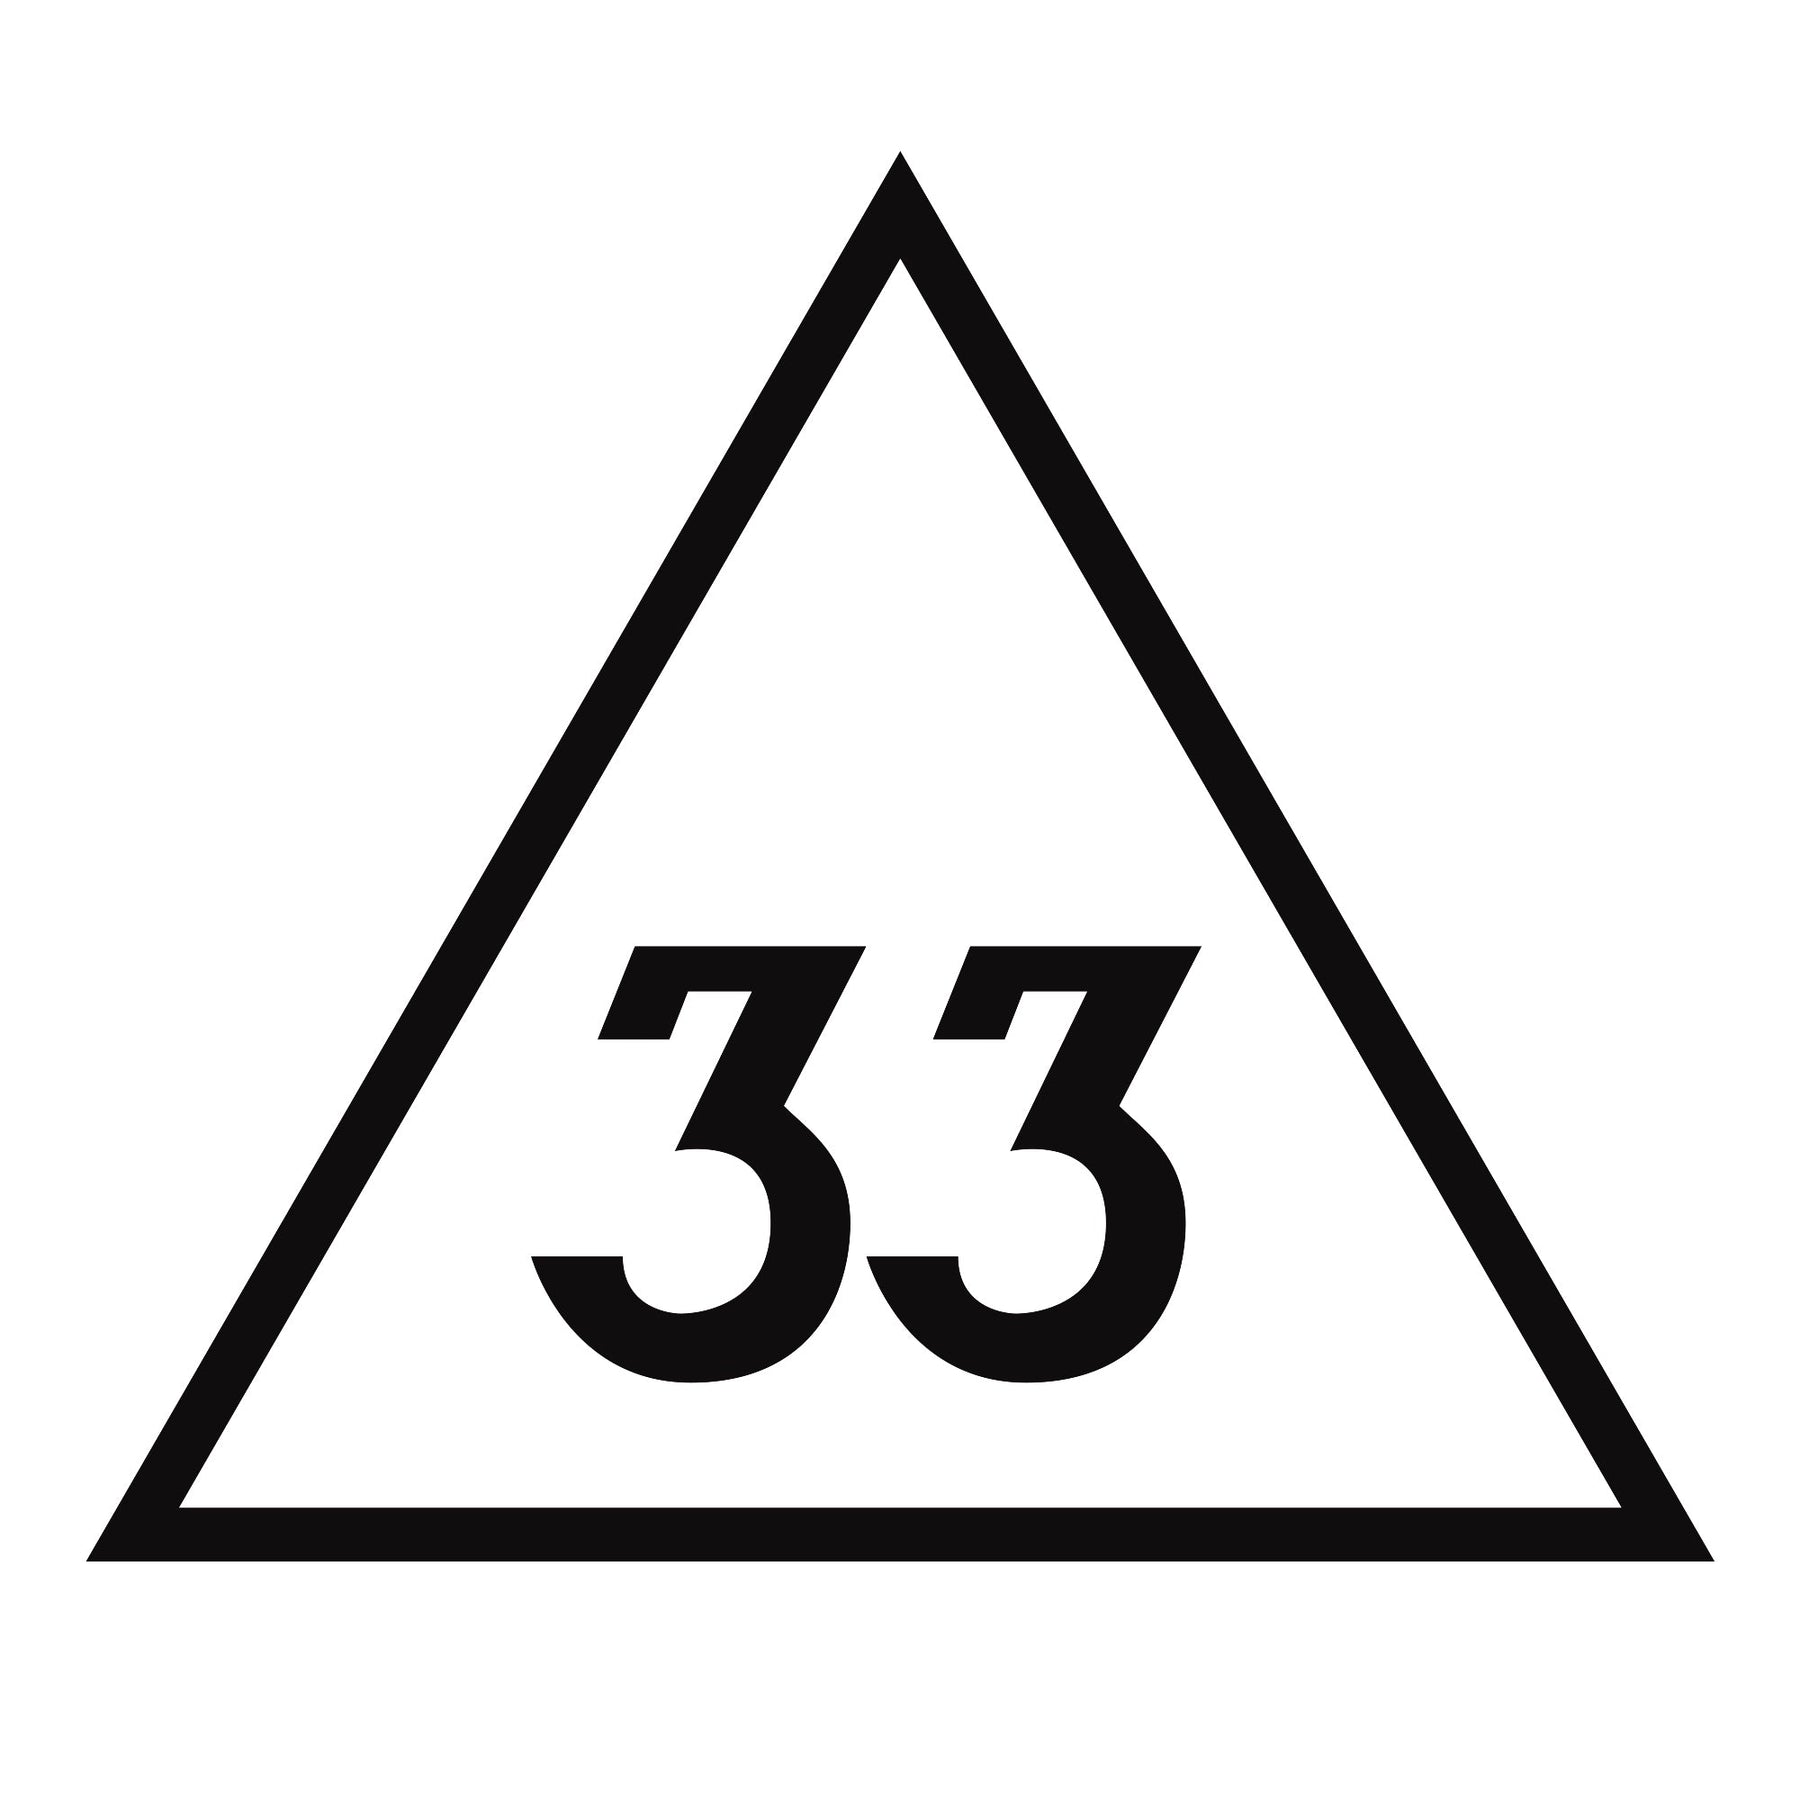 33rd Degree Scottish Rite Luggage Tag - Black Leather - Bricks Masons